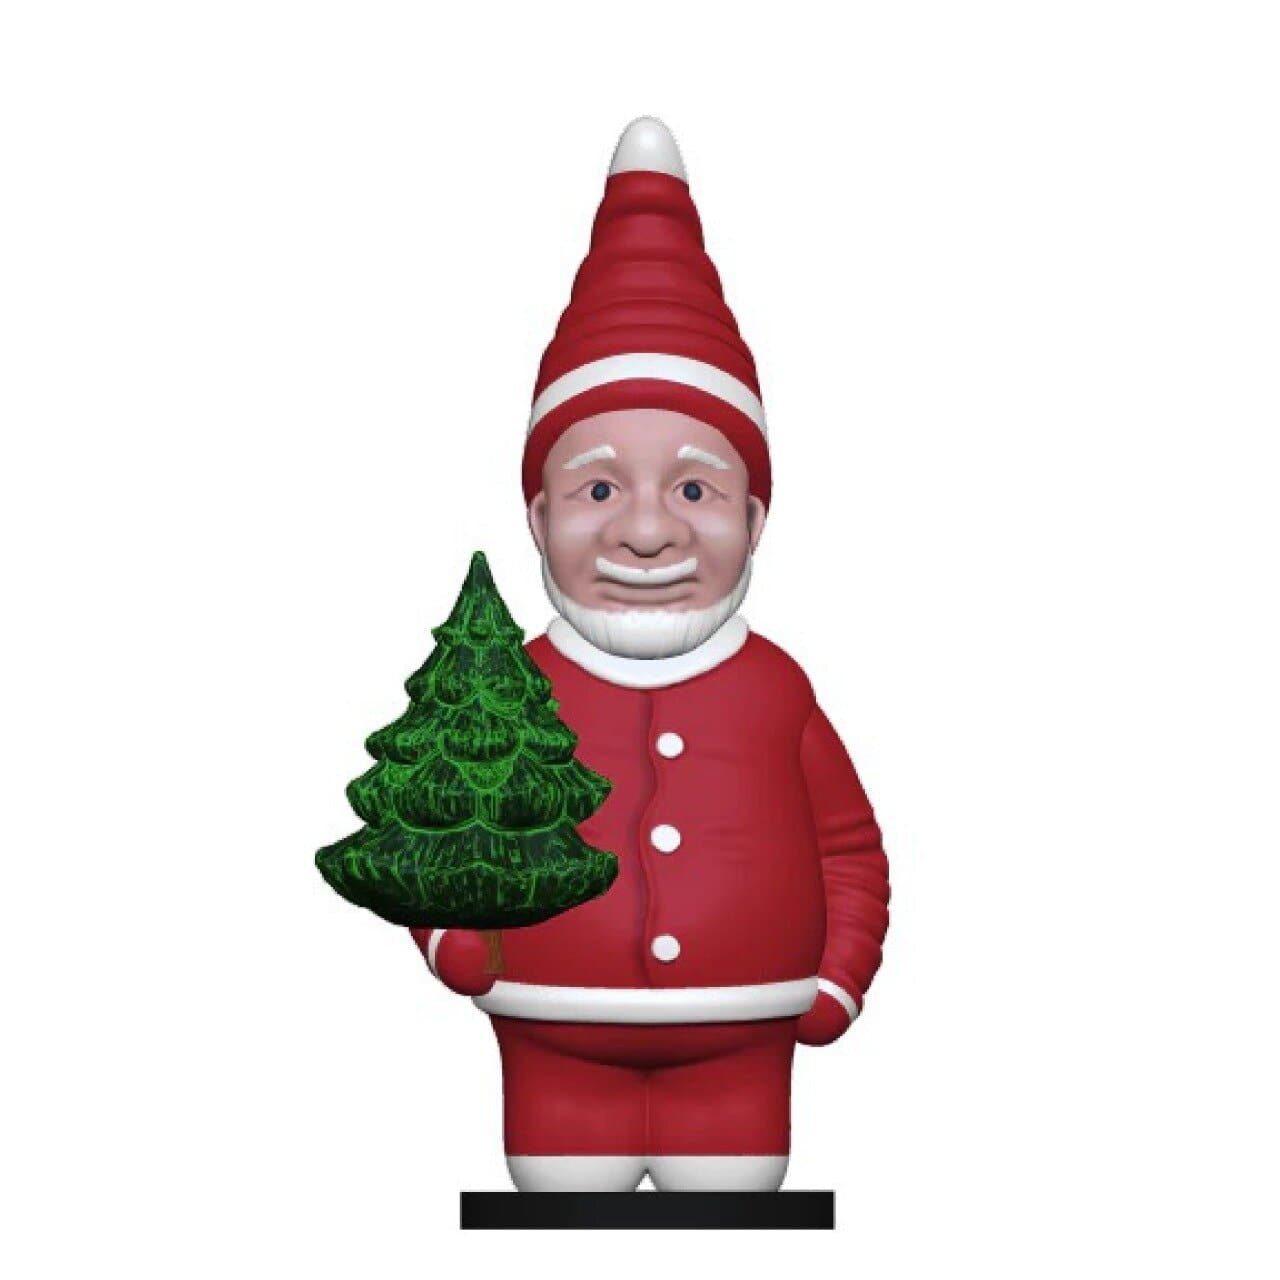 Santa_Claus_as_Christmas_Elf_Figurine_Front